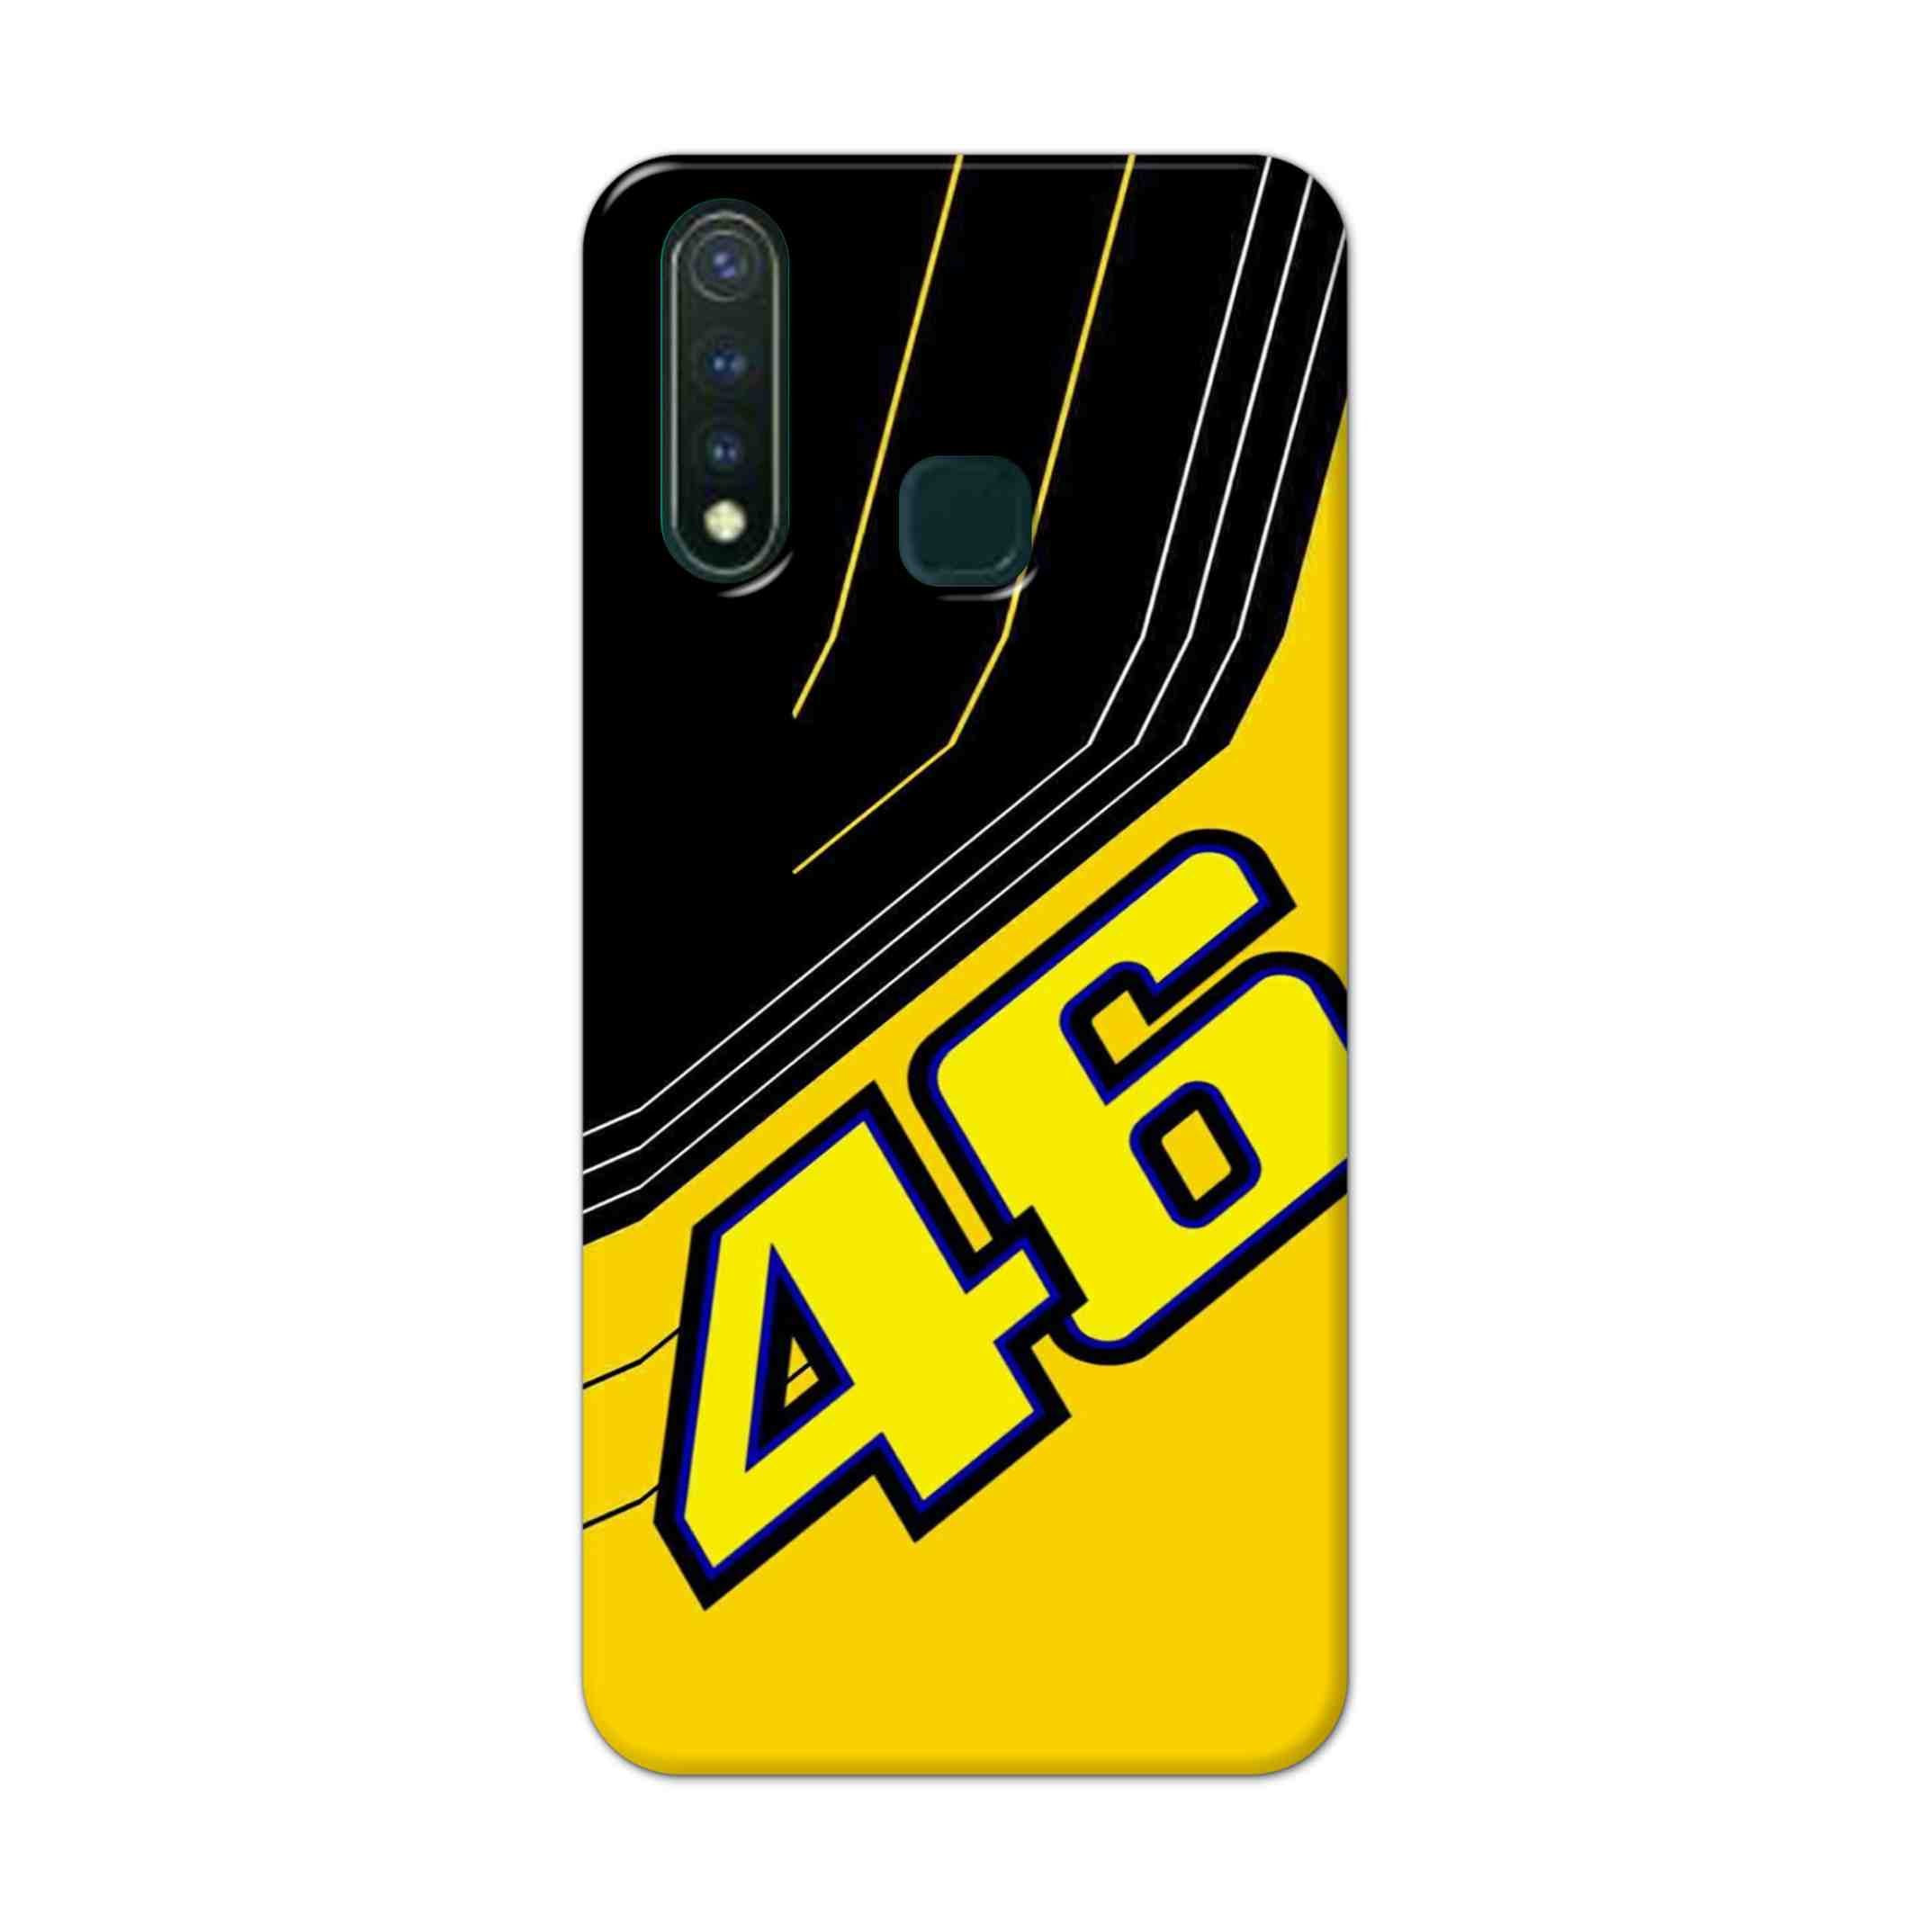 Buy 46 Hard Back Mobile Phone Case Cover For Vivo Y19 Online